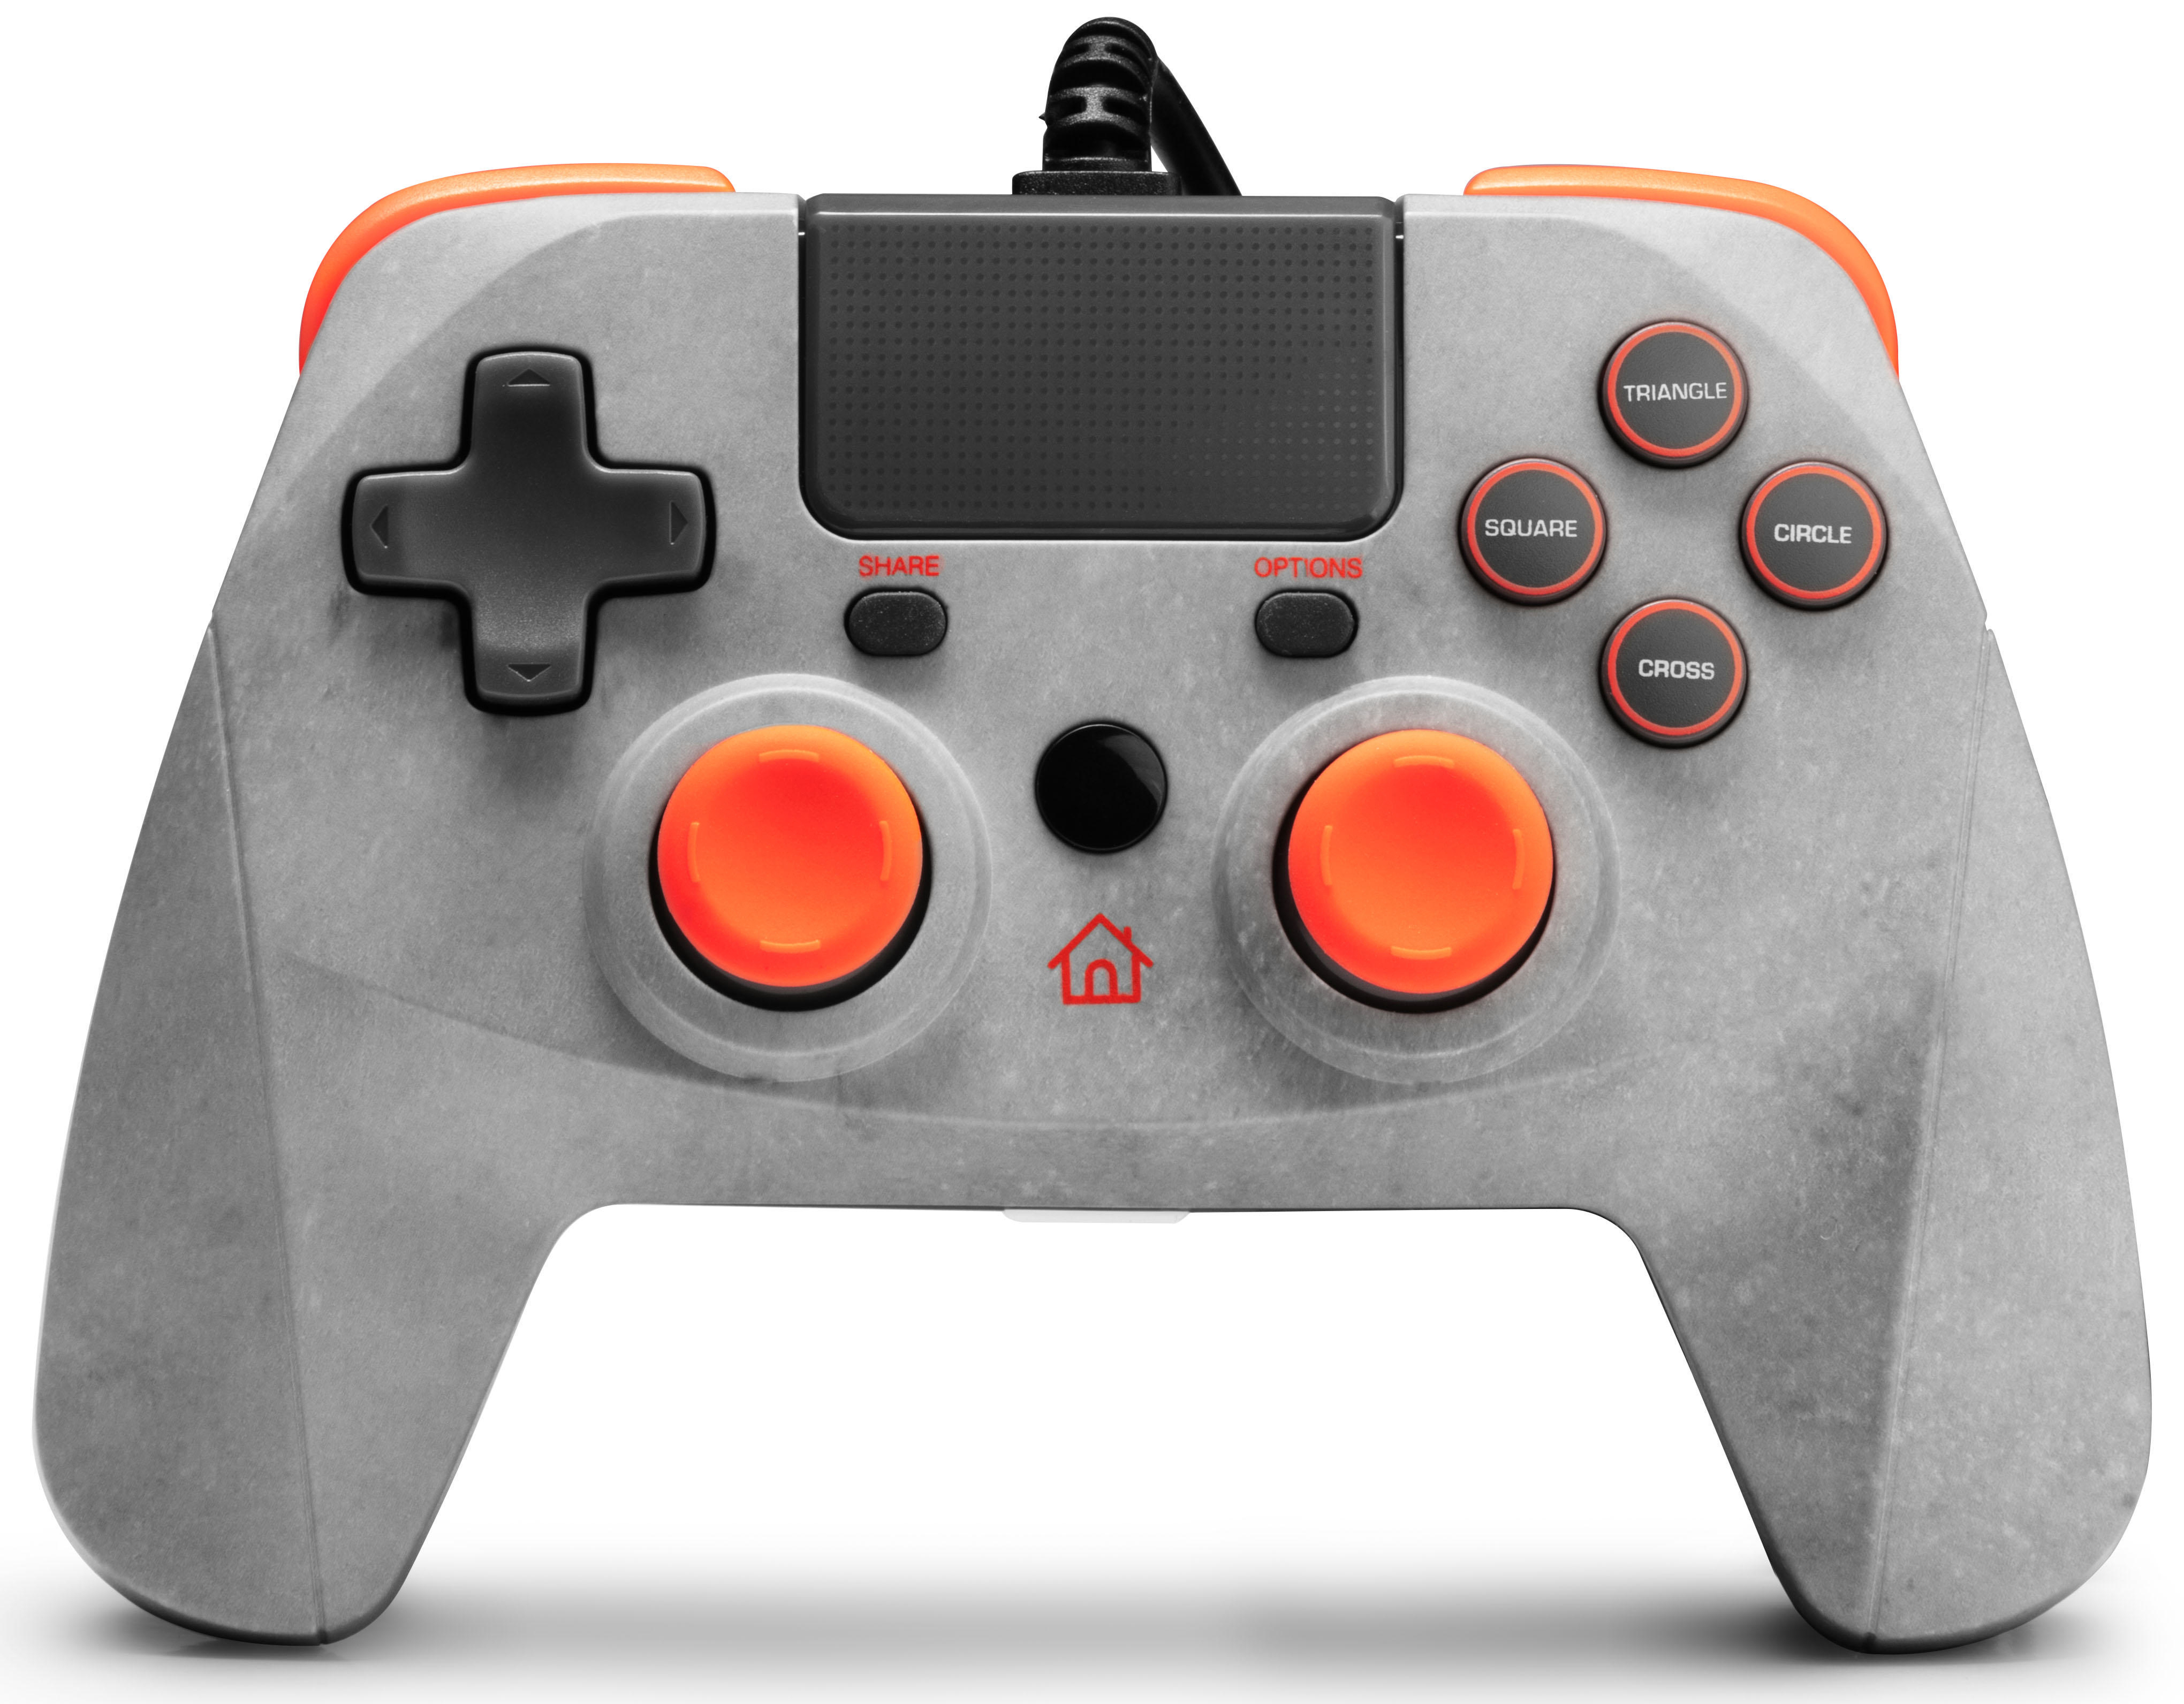 S 4 Game:Pad PlayStation für Controller ROCK SNAKEBYTE Grau/Orange 4